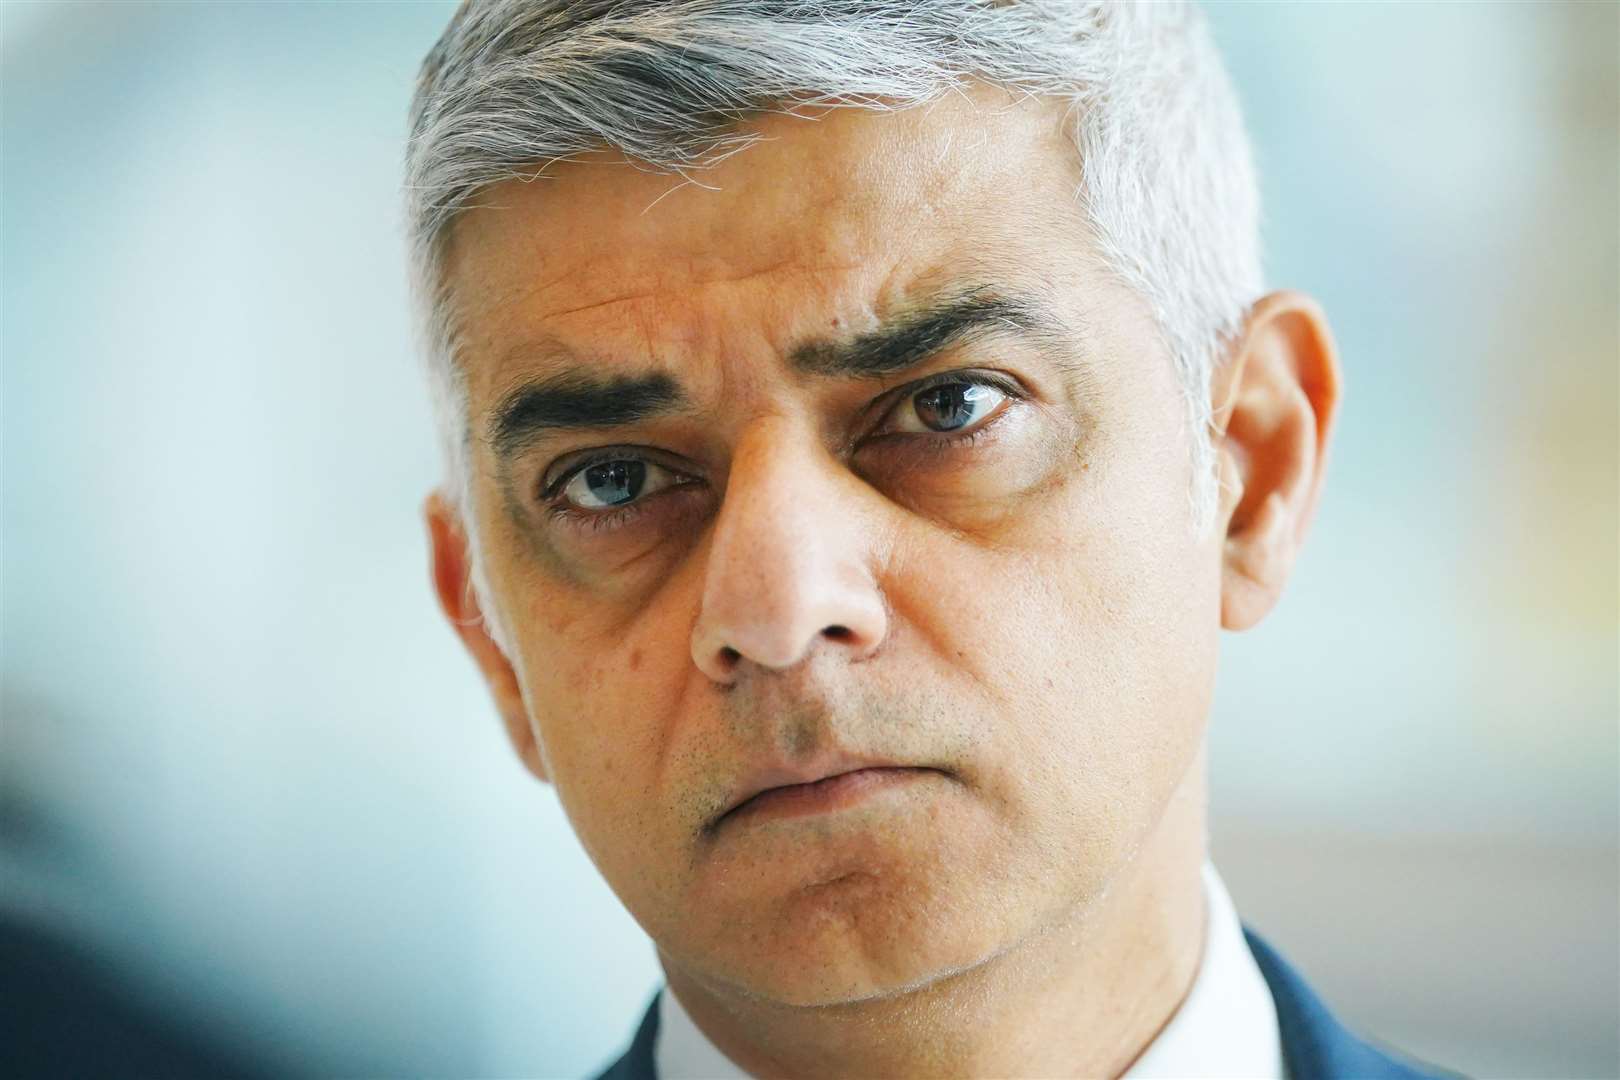 Mayor of London Sadiq Khan said it will ‘take years’ to repair trust in police (Victoria Jones/PA)